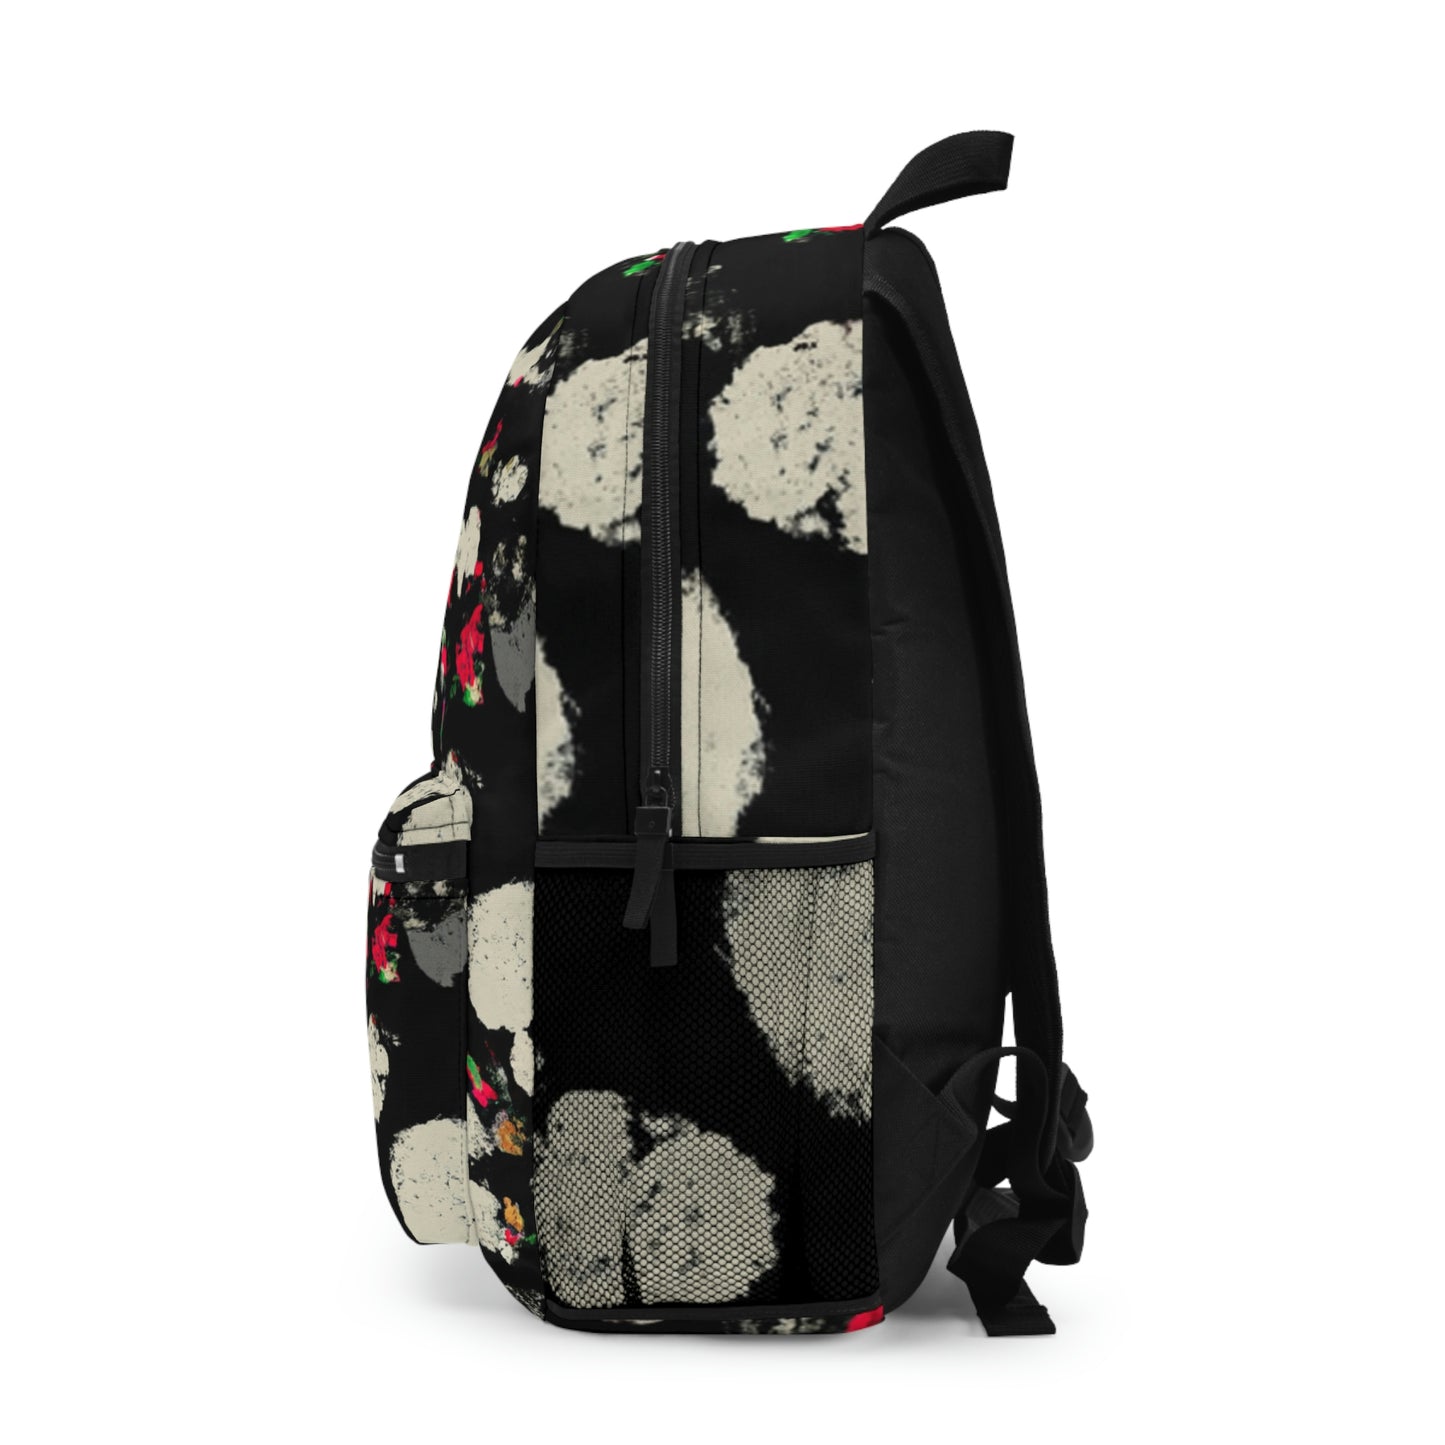 Glante Regala Backpack